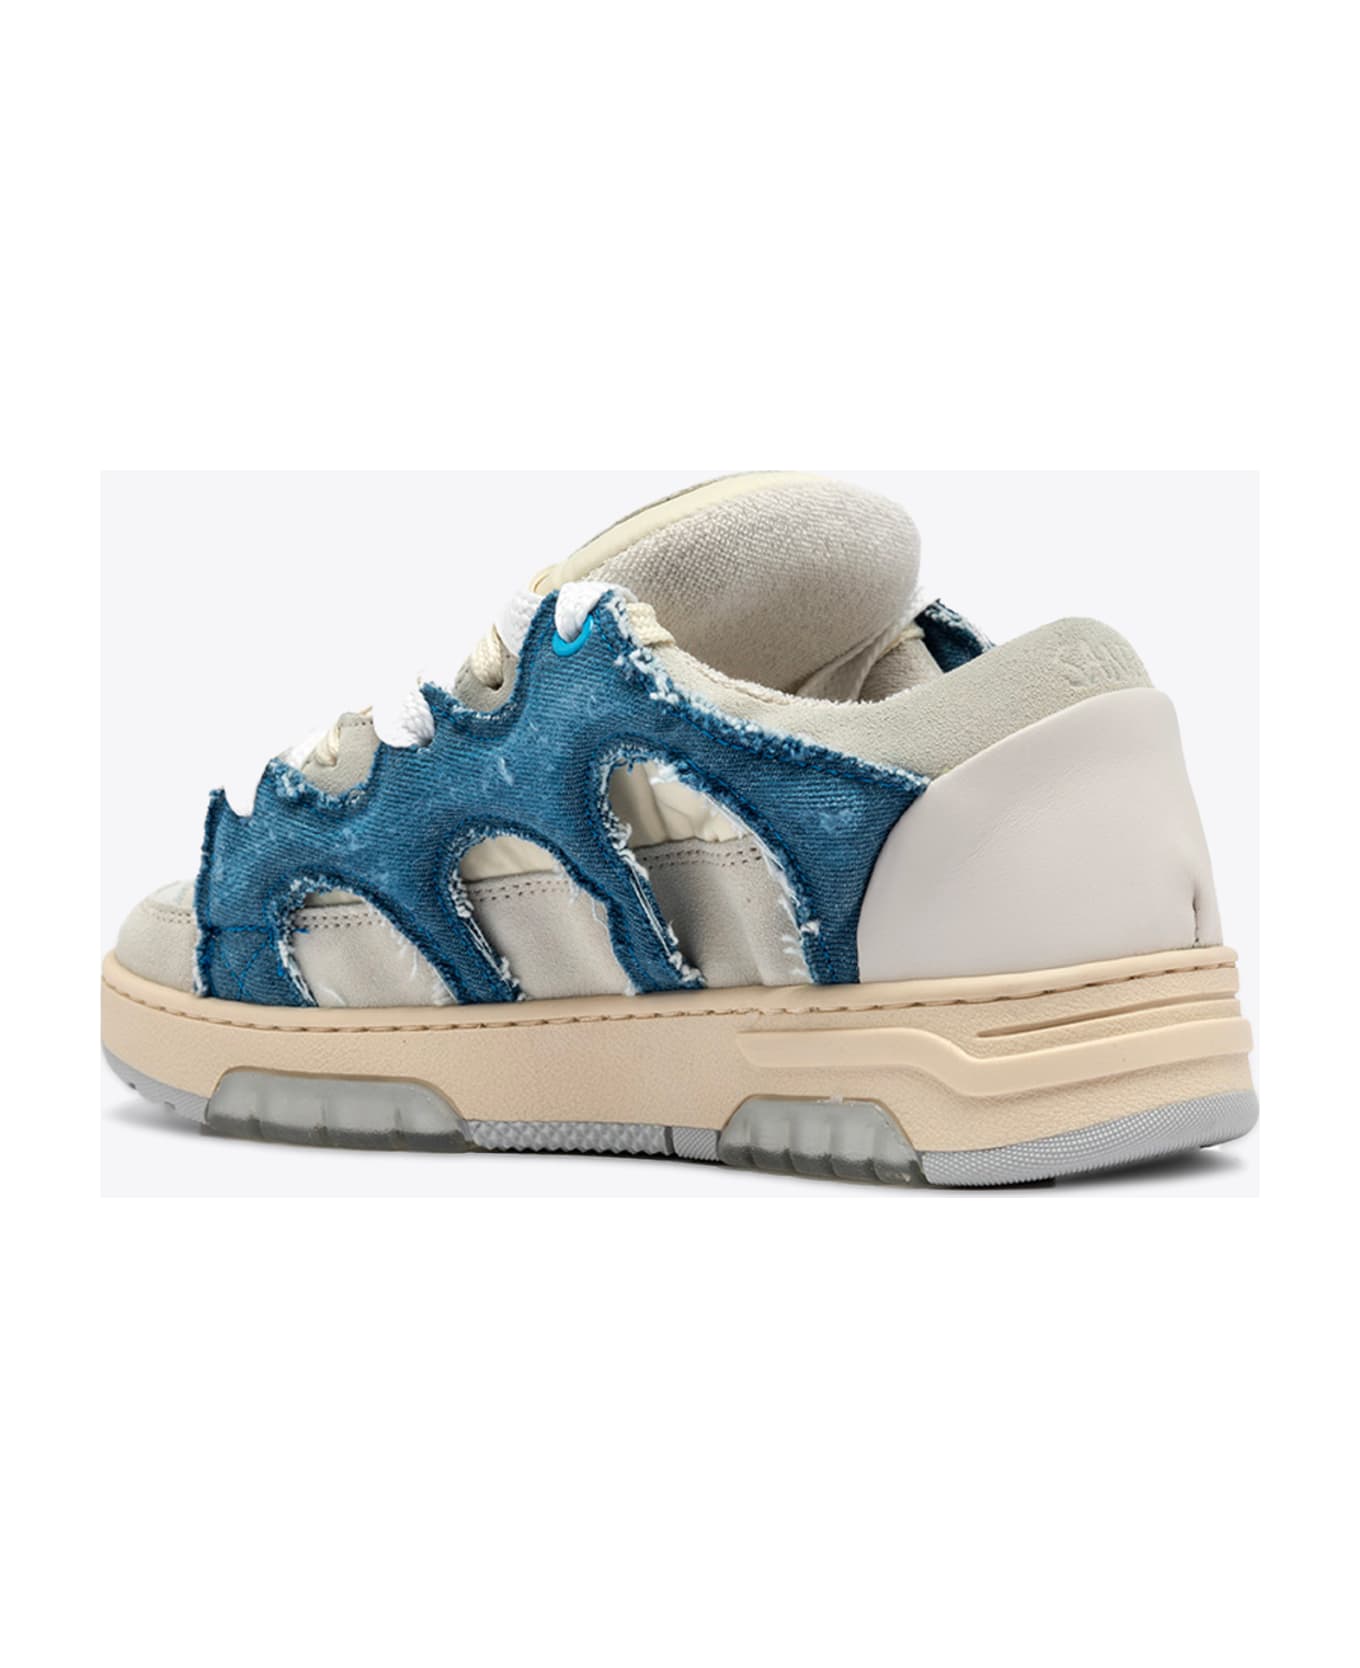 Paura Santha 1 Off white suede and blue denim low sneaker - Denim スニーカー